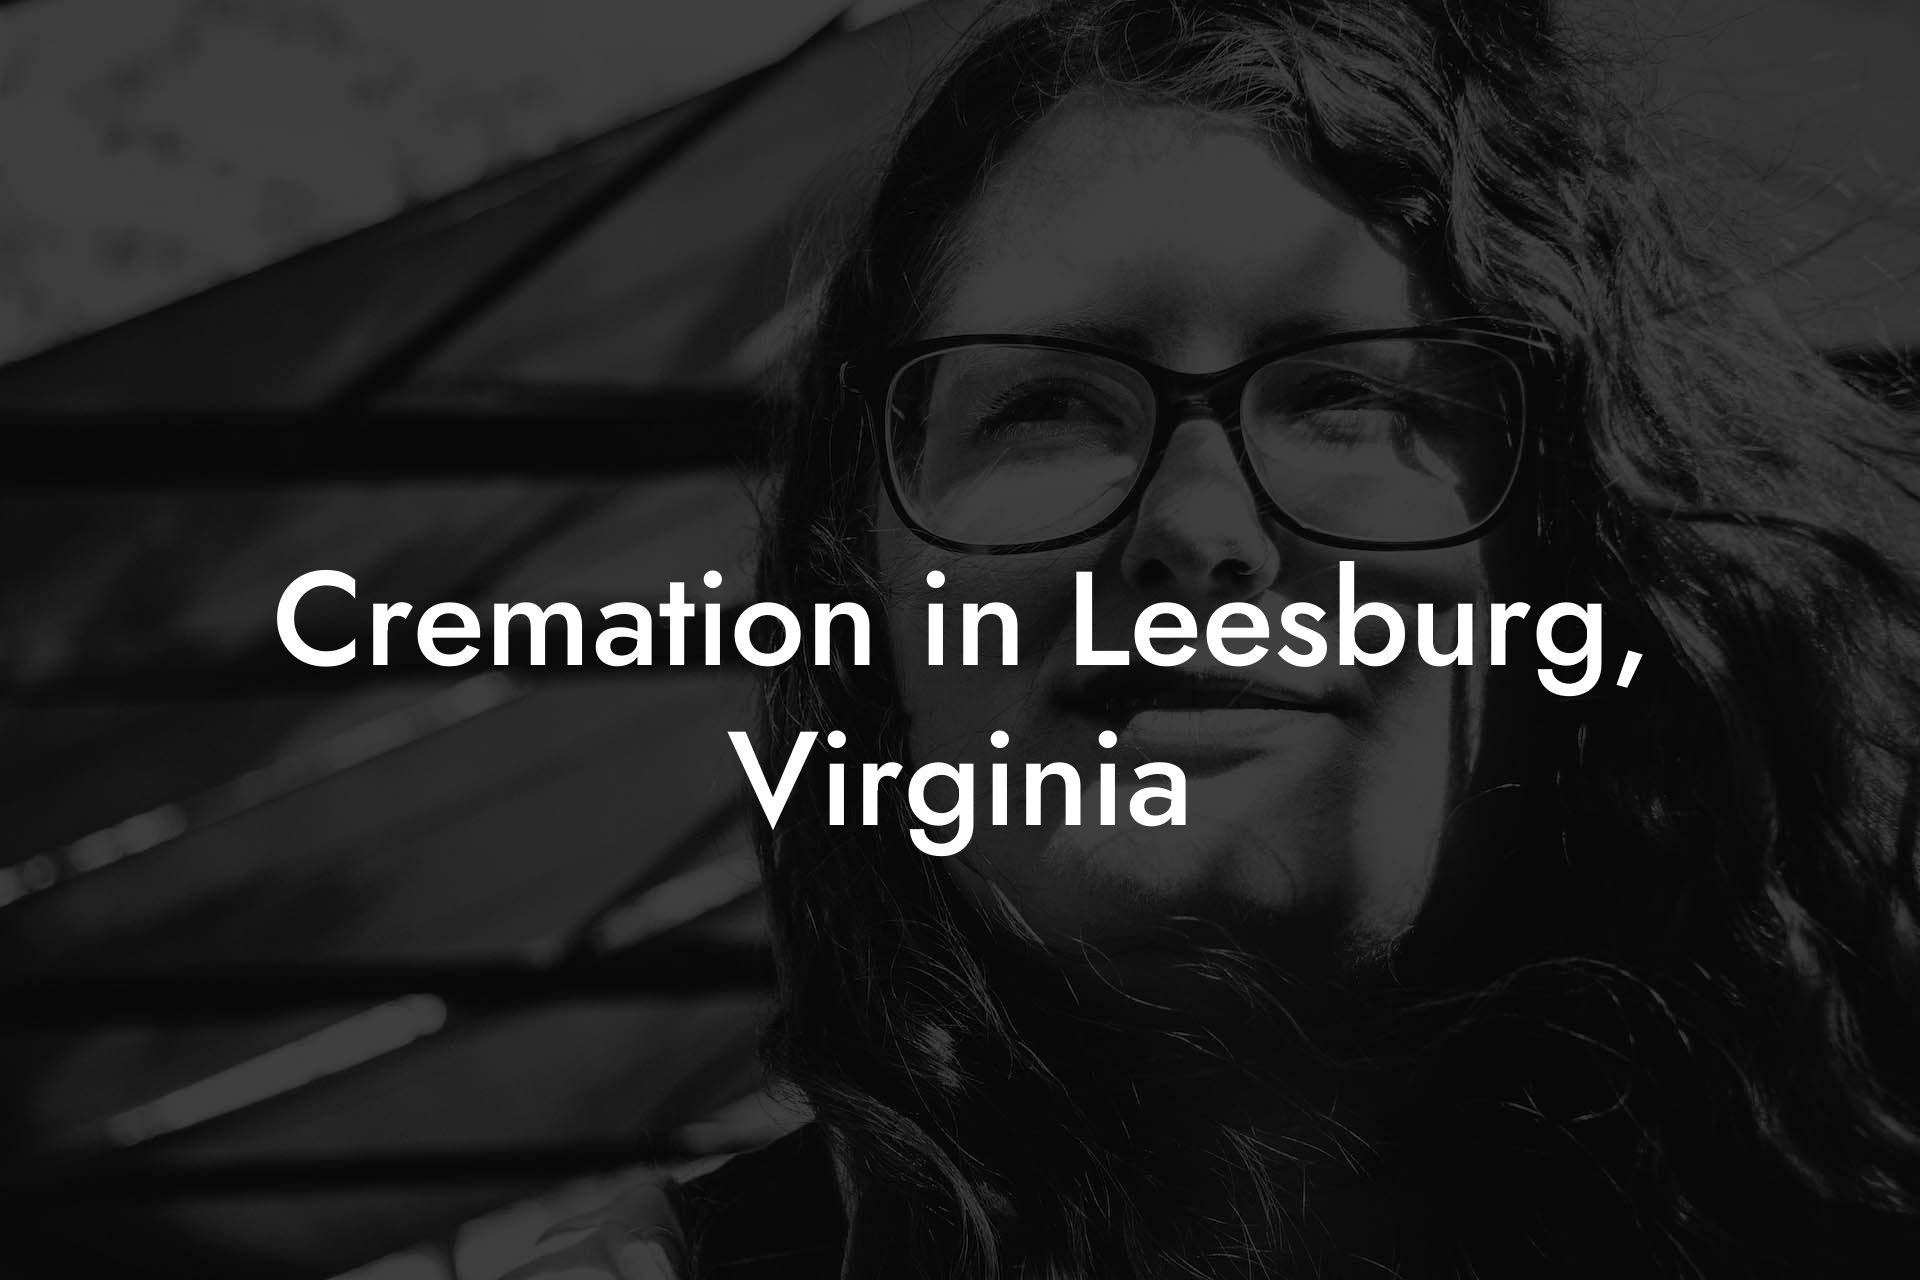 Cremation in Leesburg, Virginia